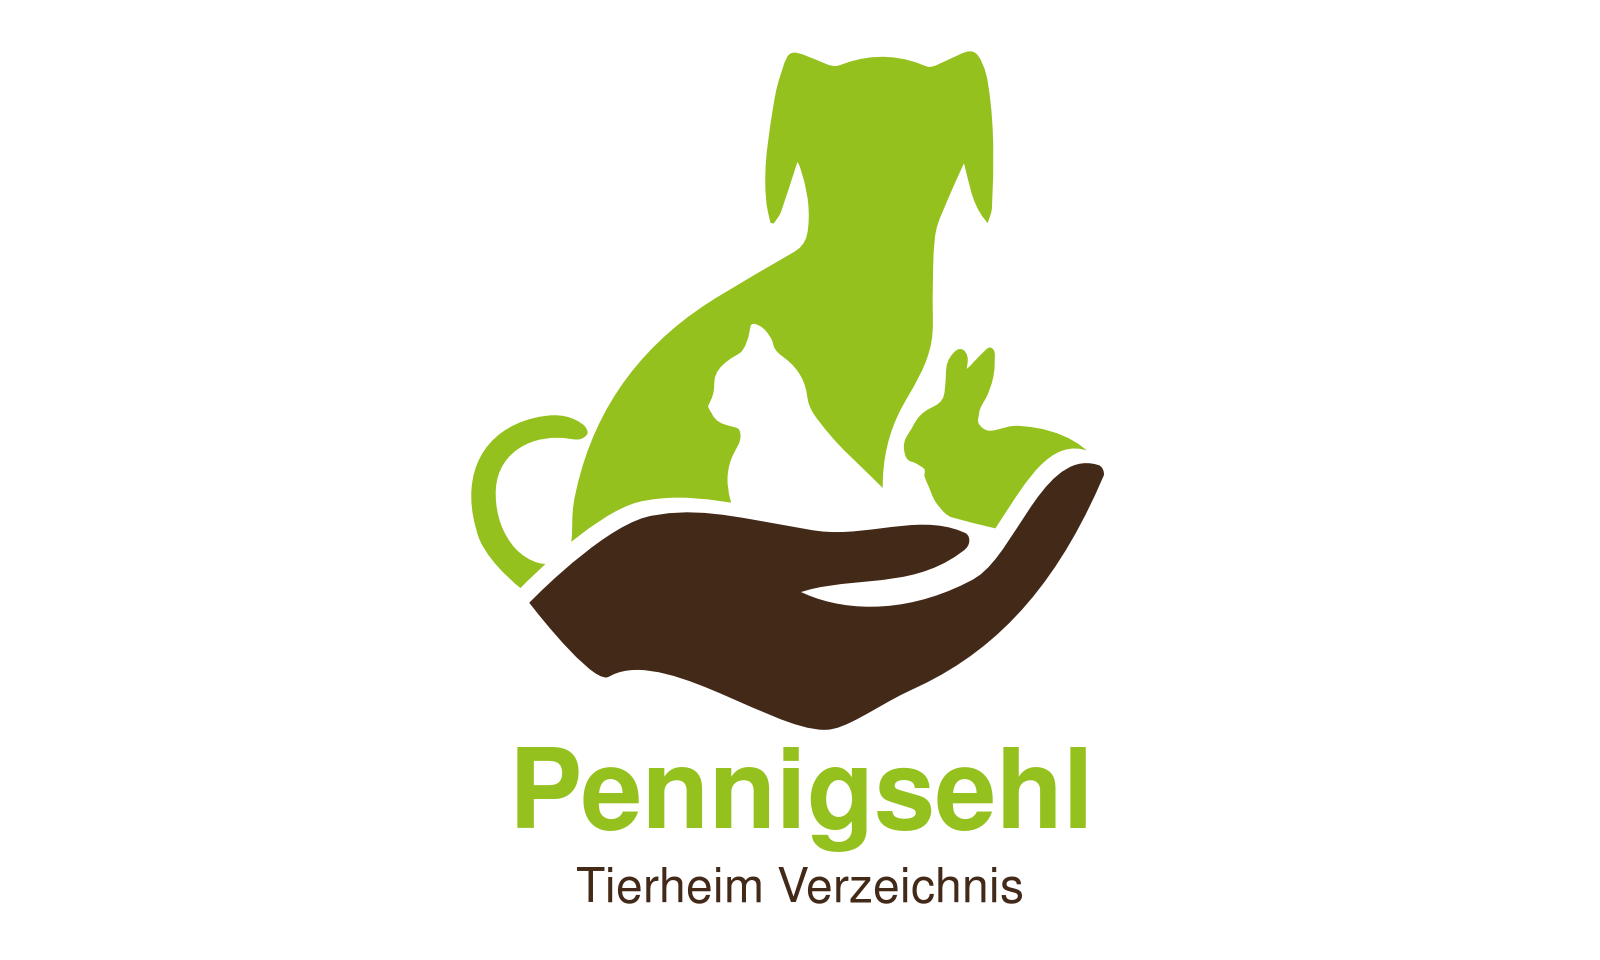 Tierheim Pennigsehl